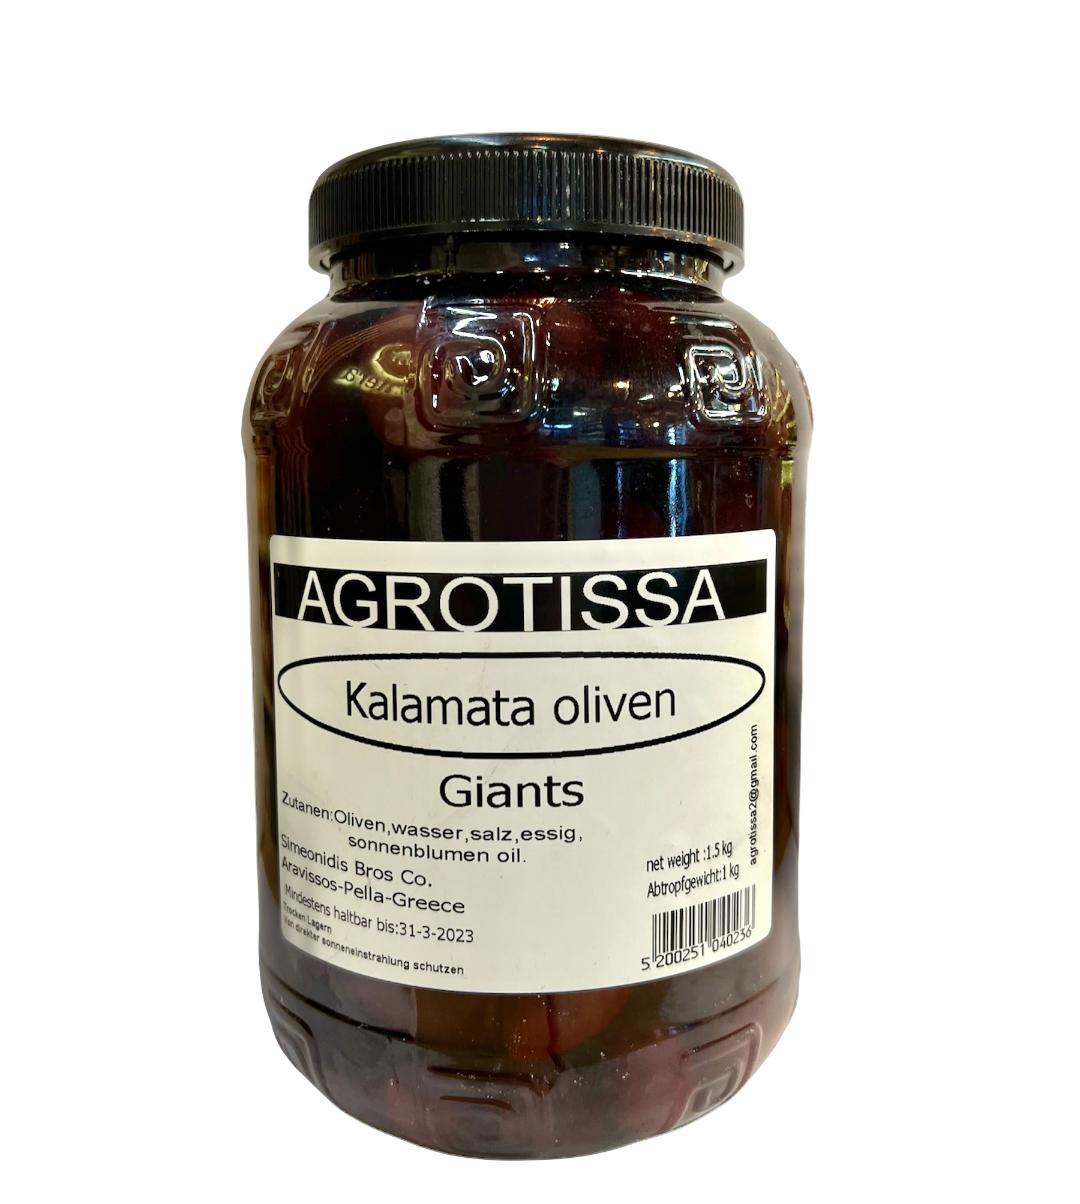 Agrotissa Kalamata Kalamon Oliven Olives Greek Giants / Colossal 1kg